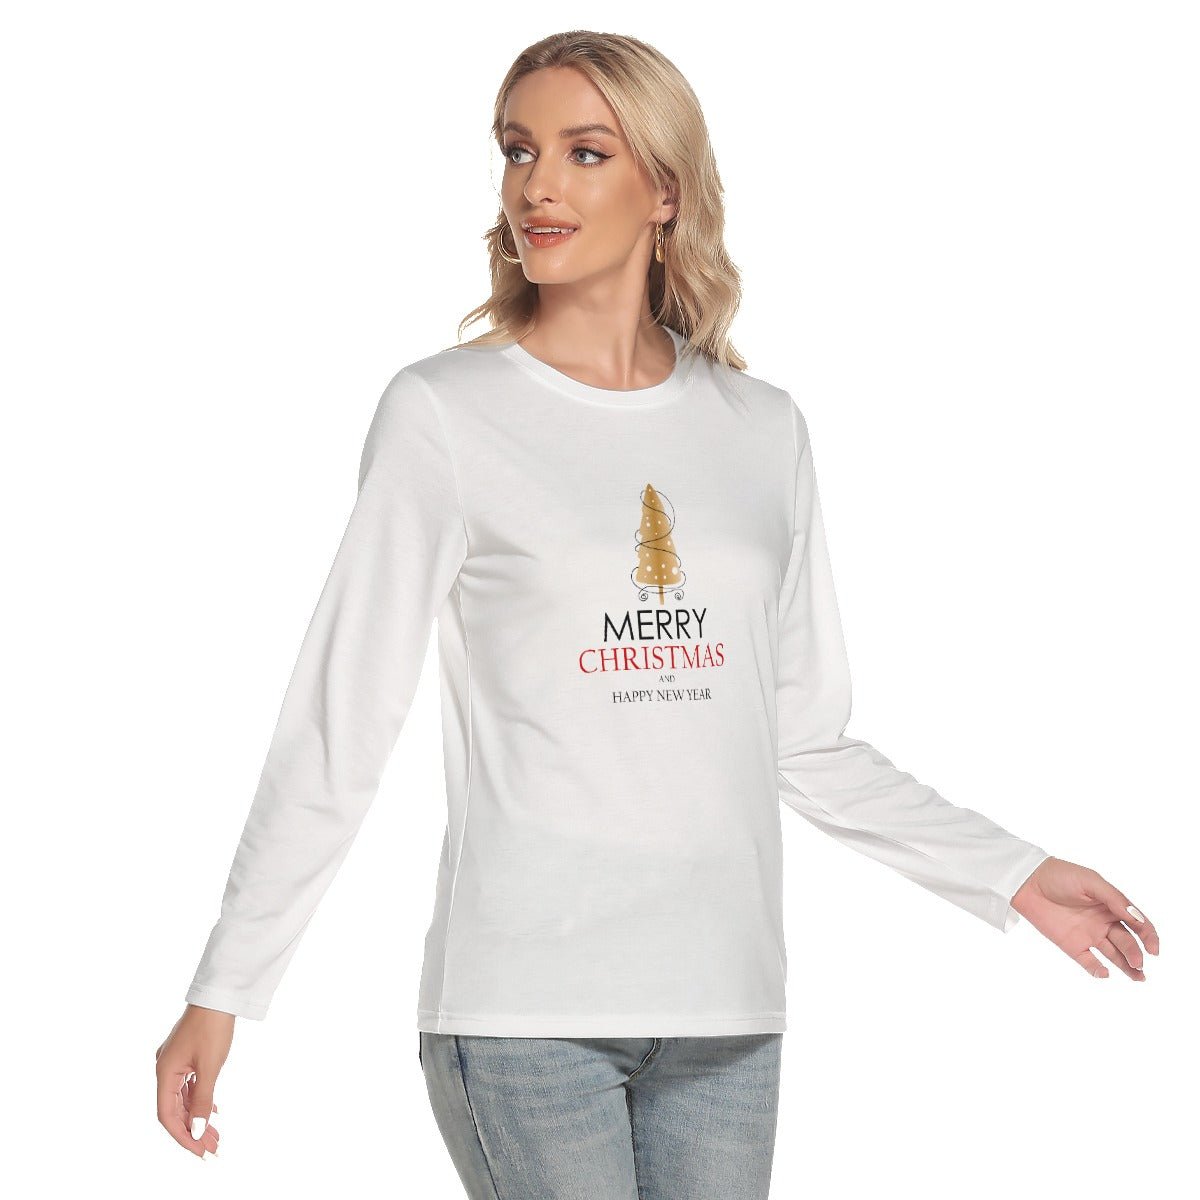 Women's Long Sleeve Christmas T-shirt - Gold Tree - Festive Style